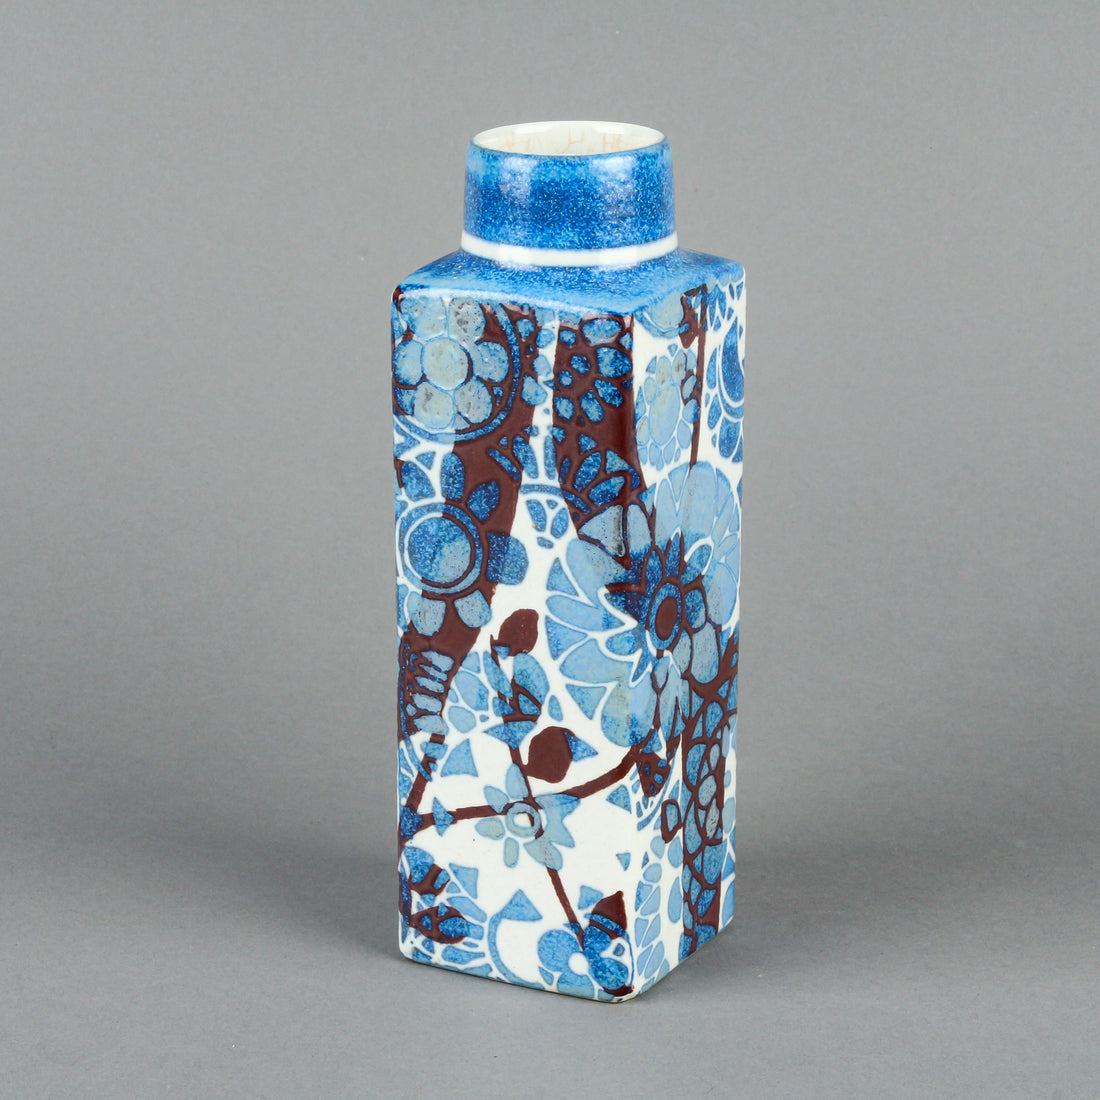 ROYAL COPENHAGEN Johanne Gerber Baca Blue Fajance Vase 780-3455